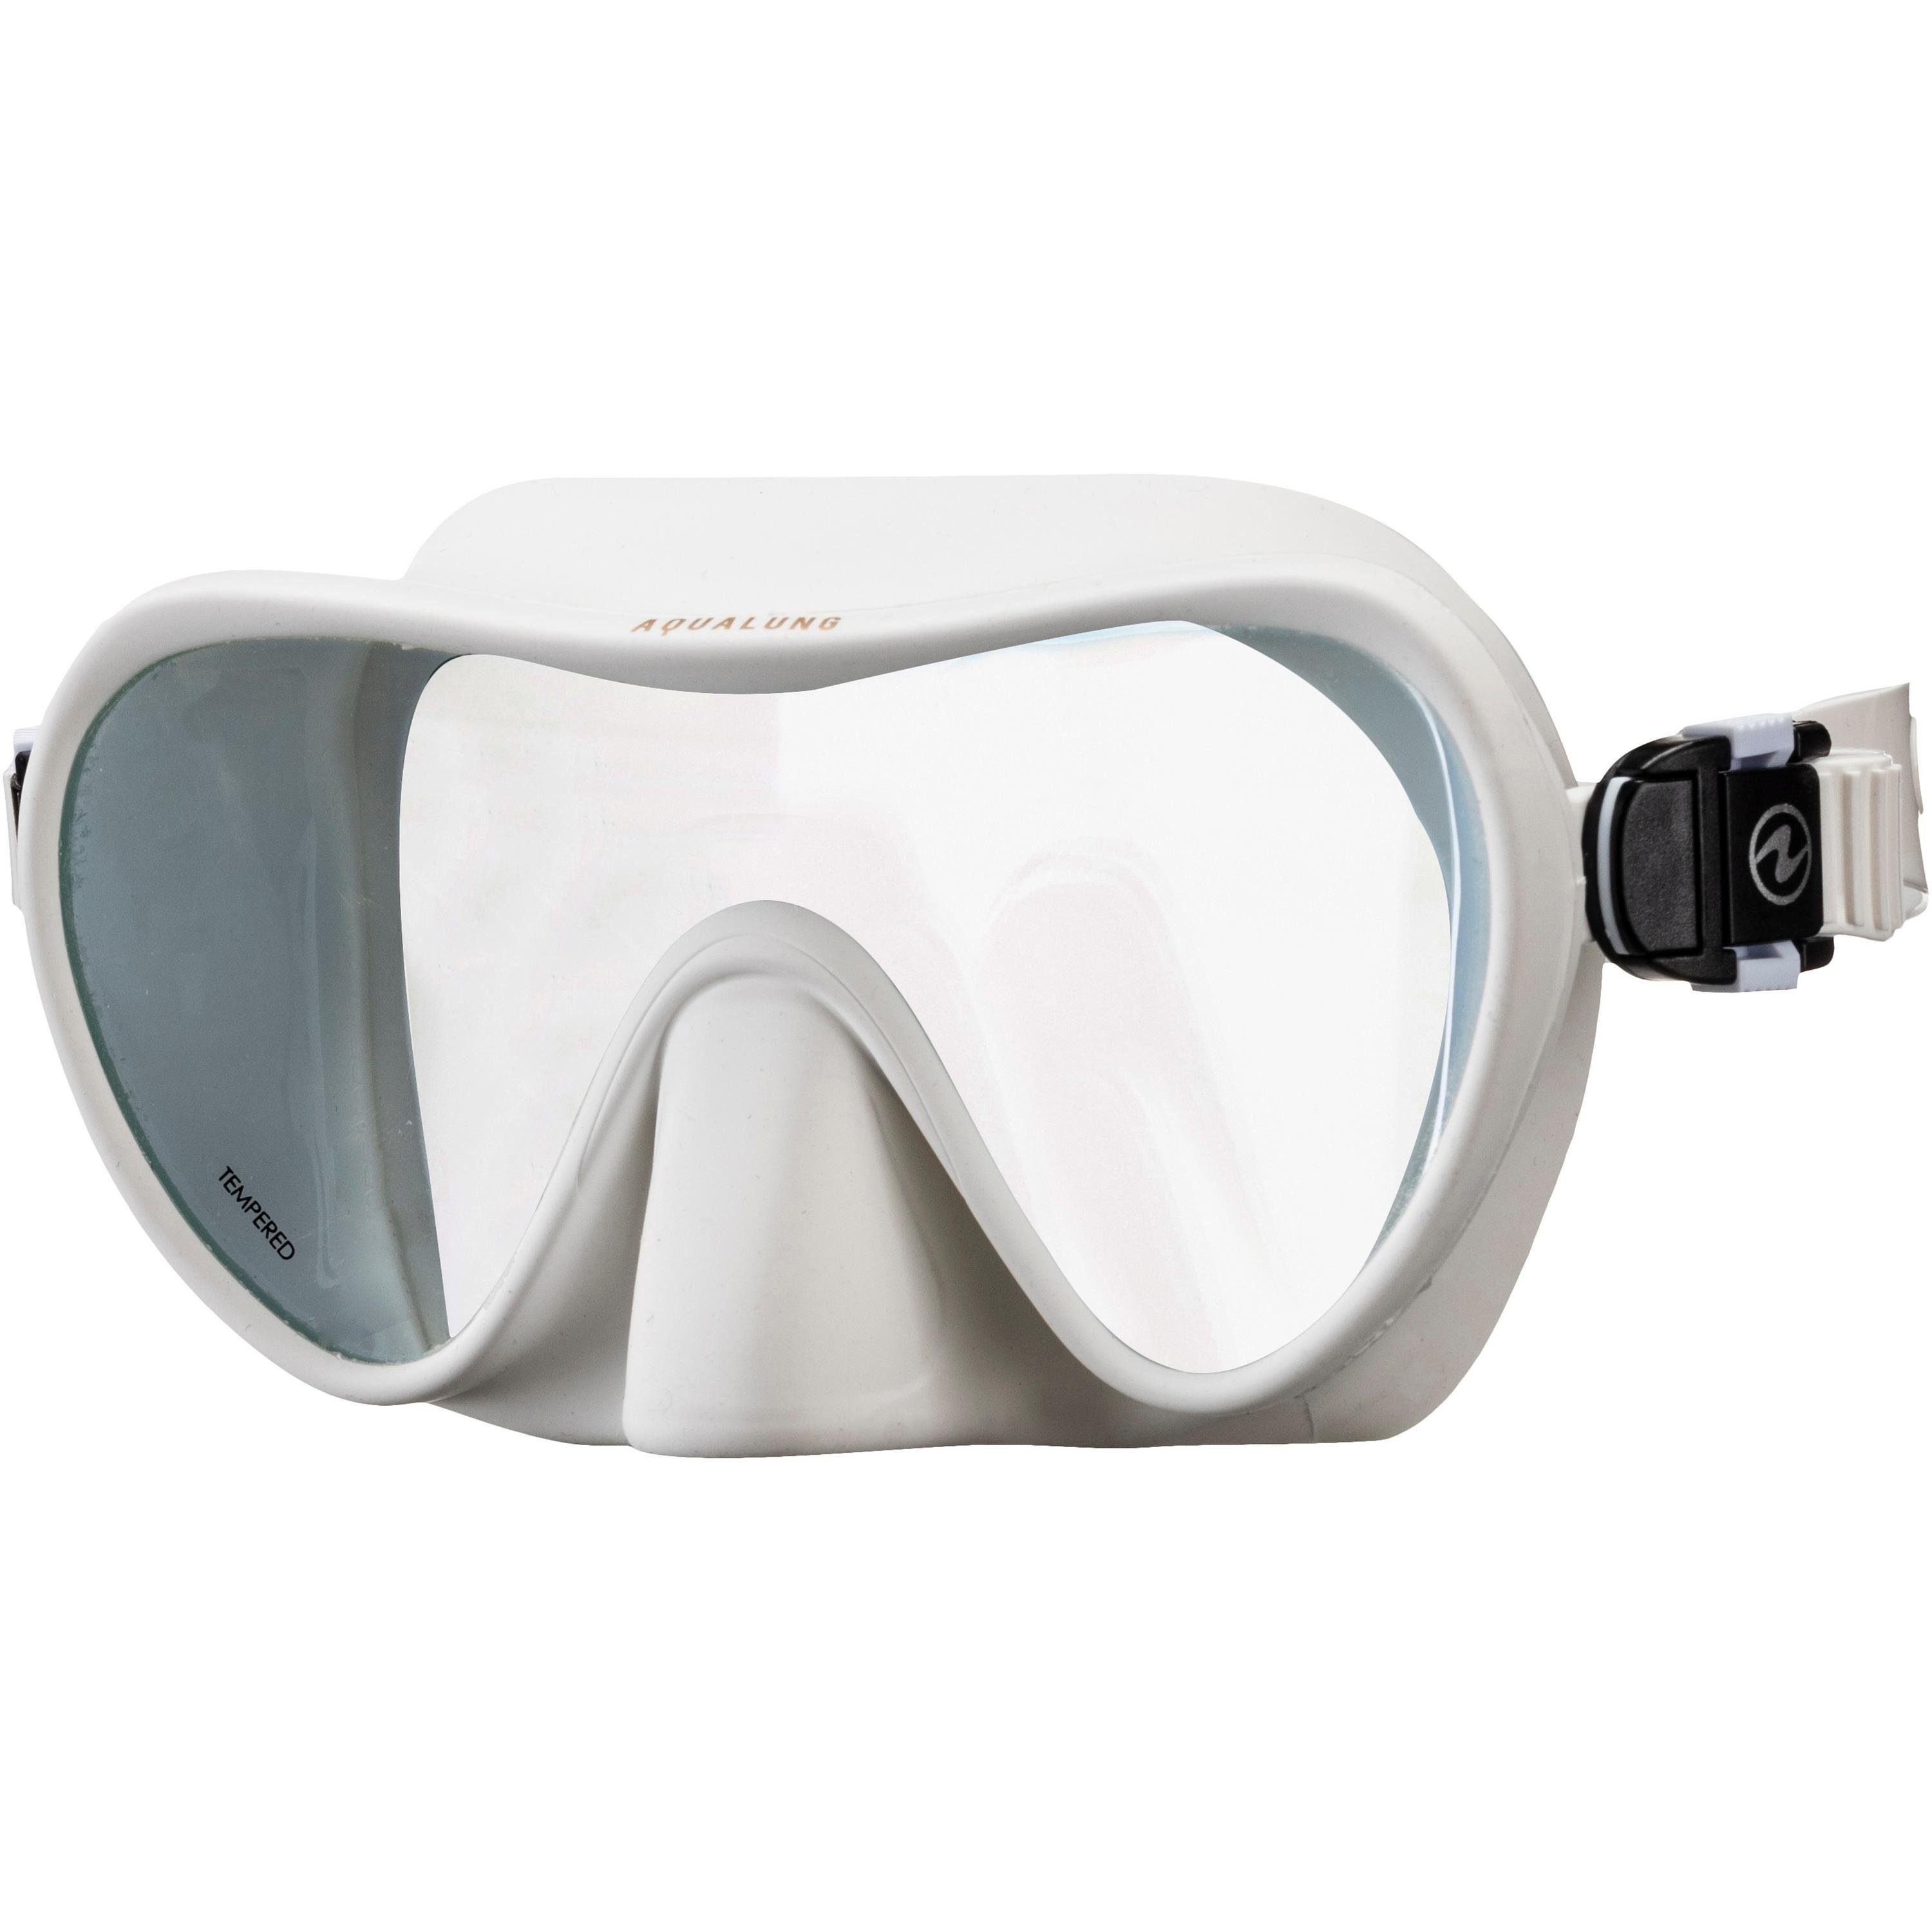 Aqua Lung Sport Taucherbrille NABUL, Weiche Silikondichtung